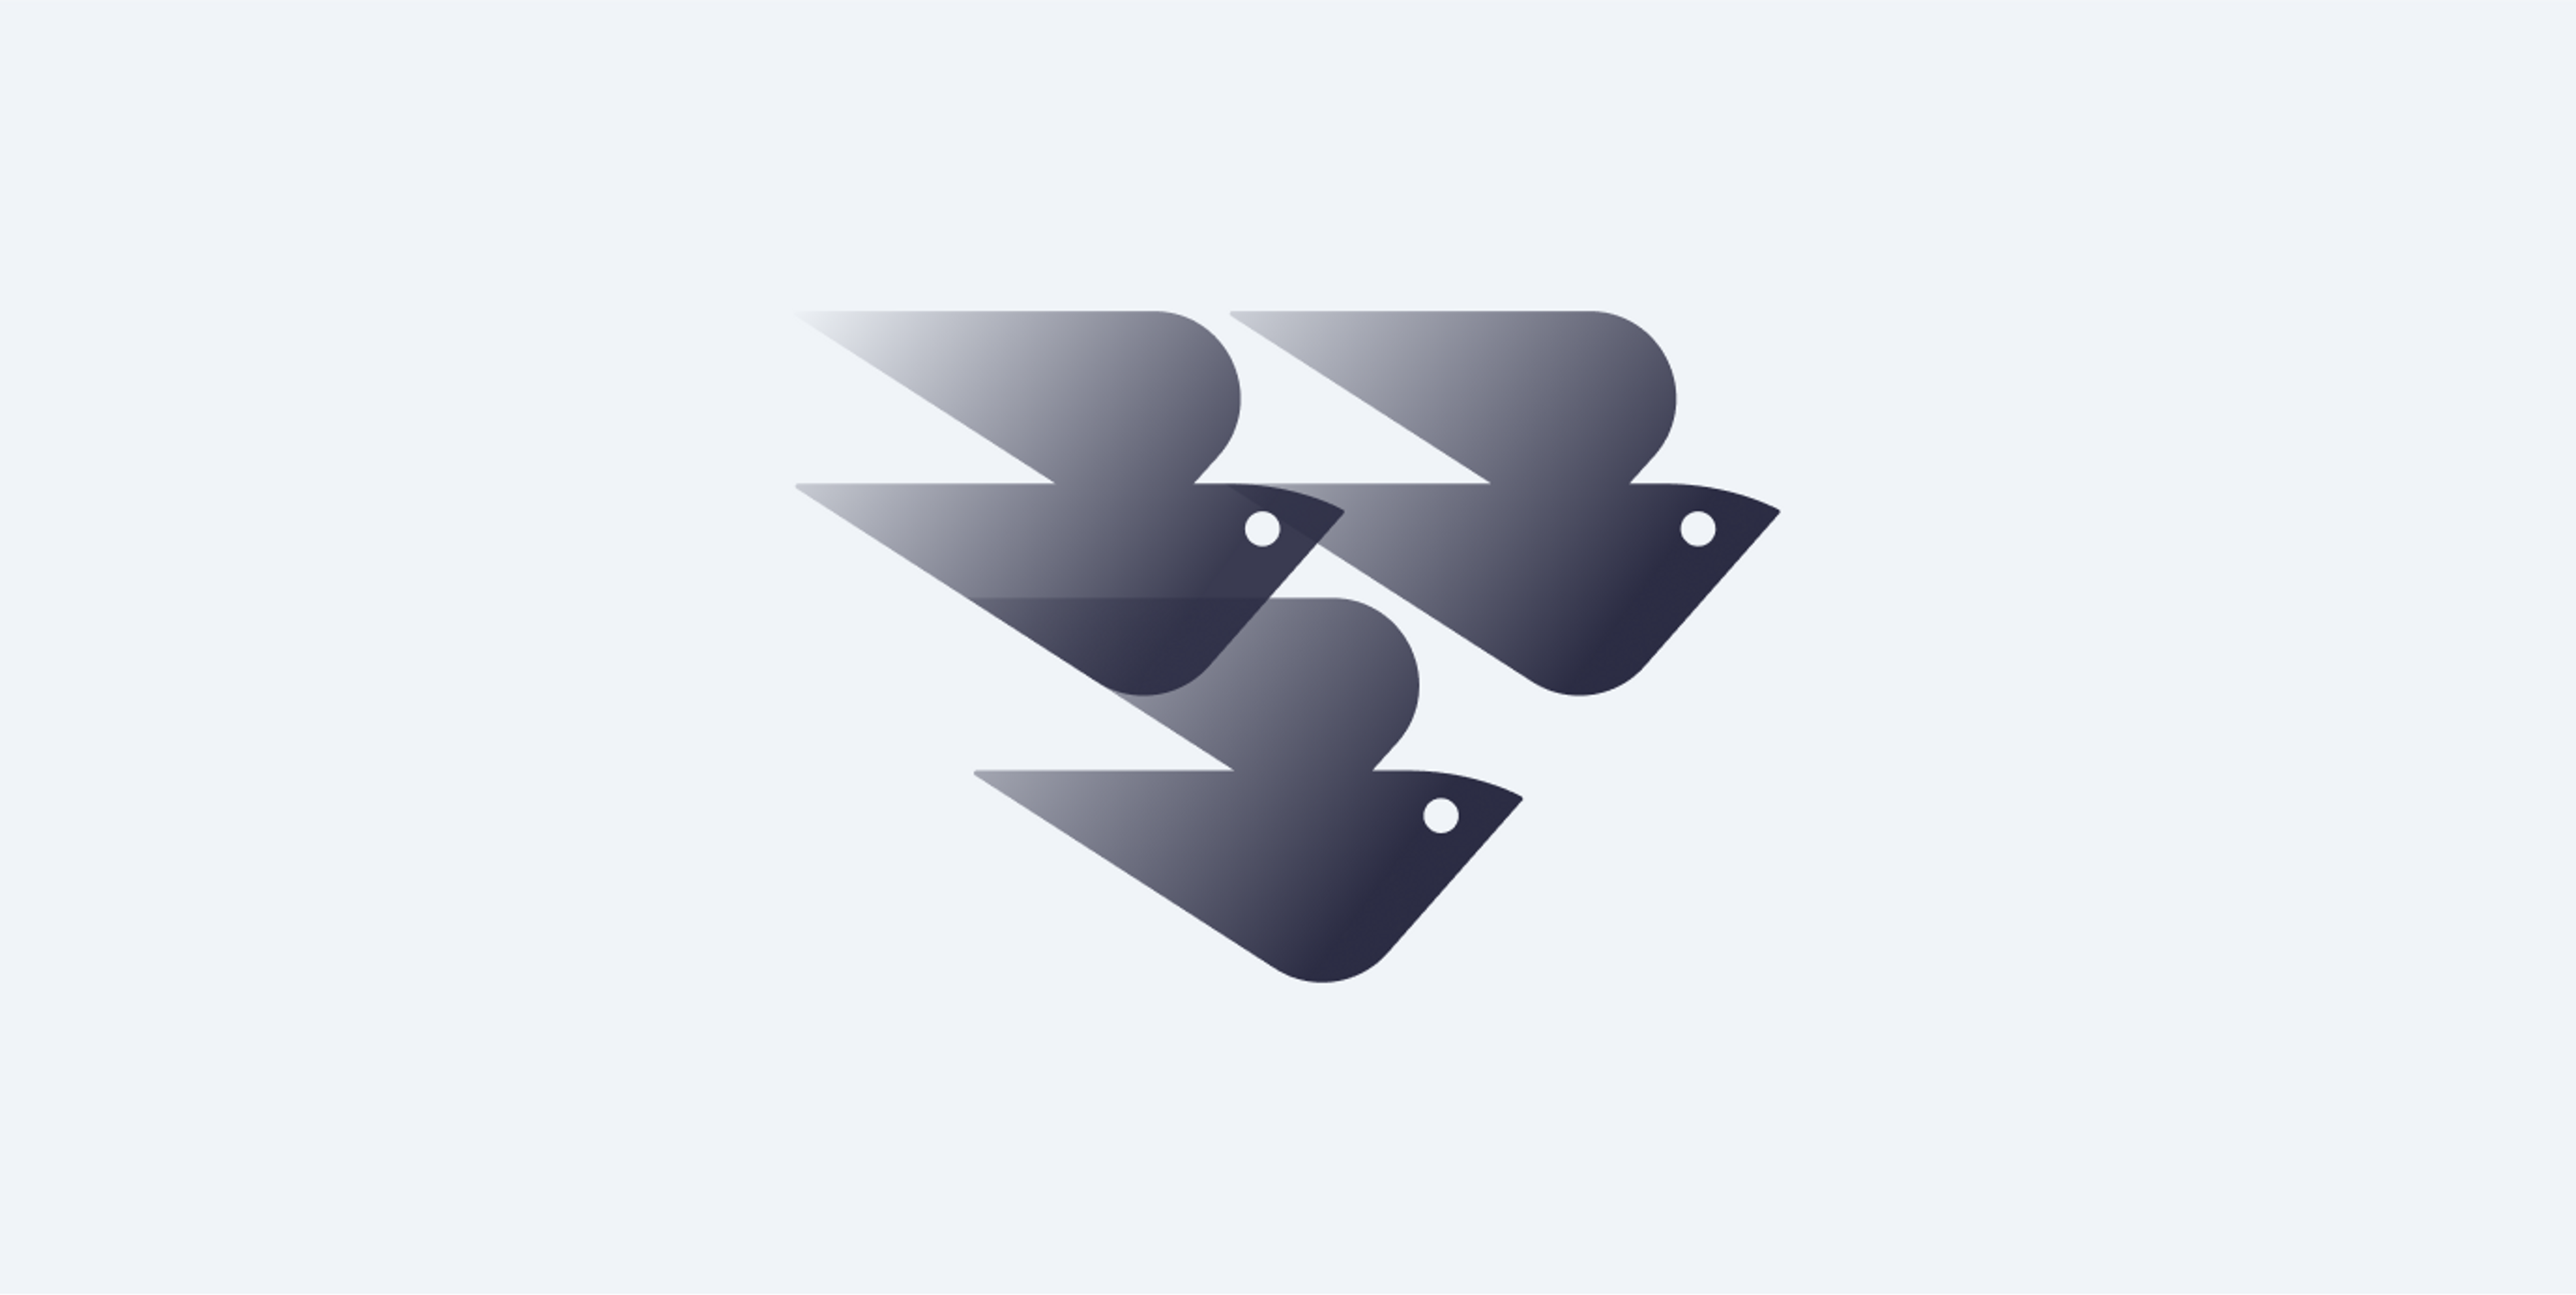 Sora Union logo made of three overlapping abstract bird shapes 